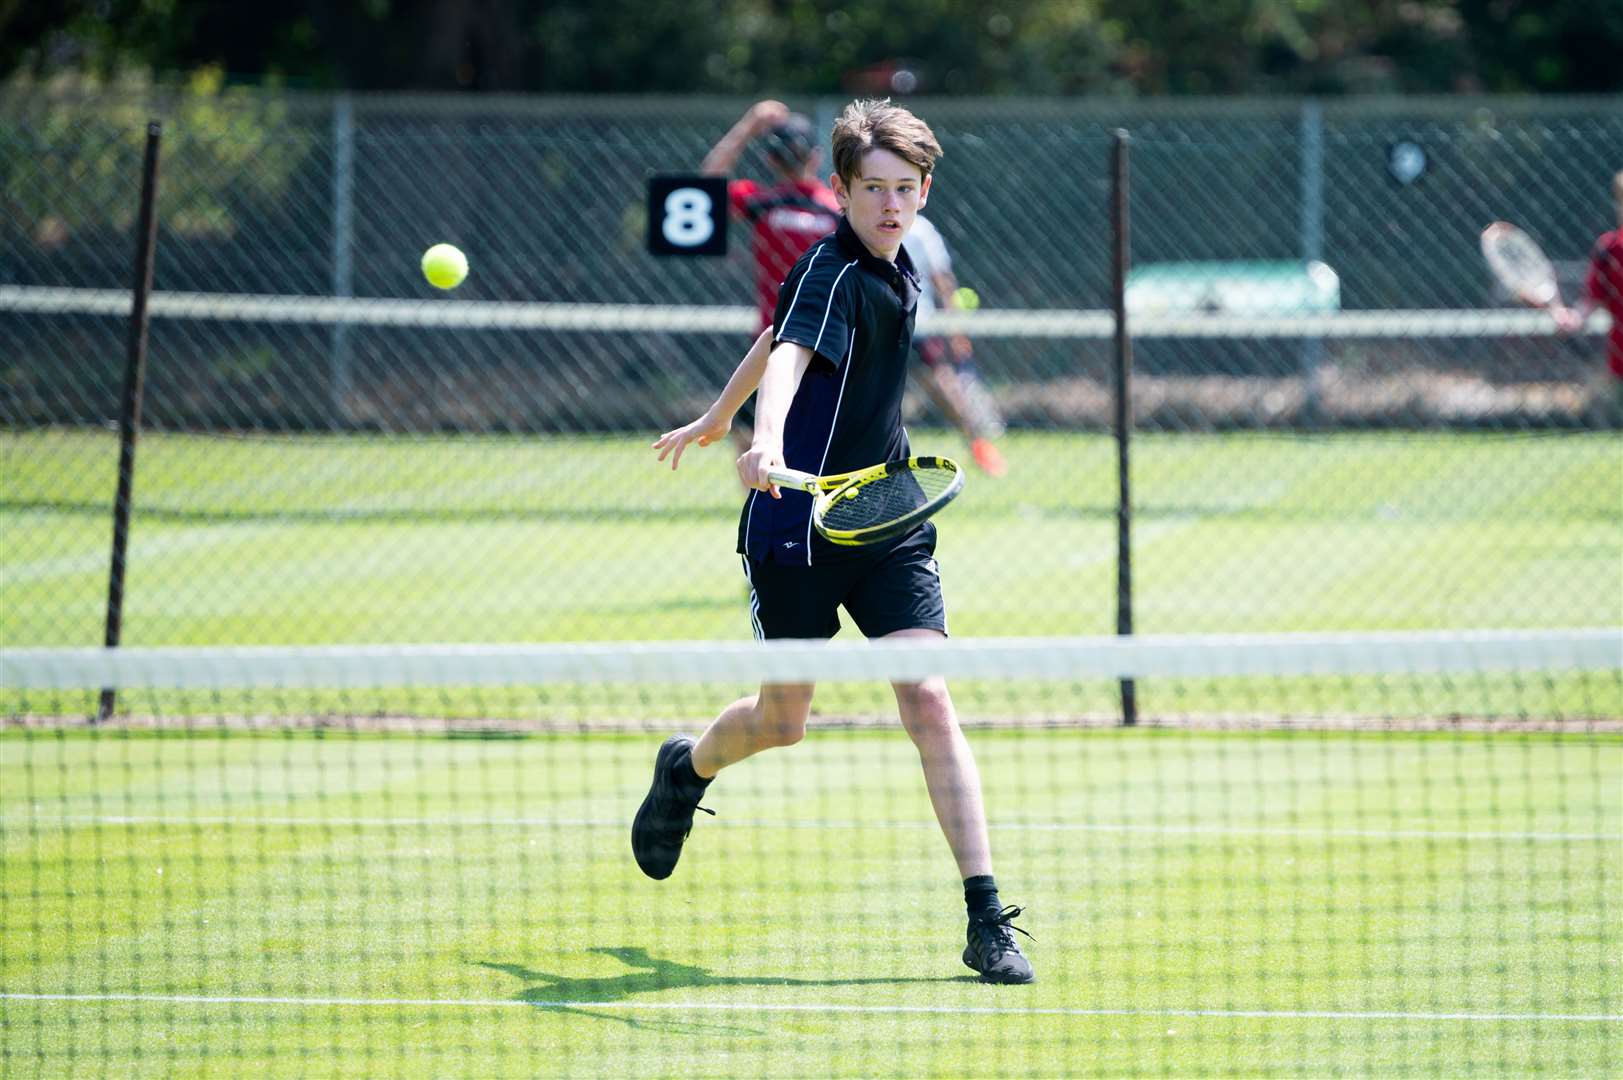 The KS3 Tennis tournament held at Hunstanton. Pictures: Ian Burt